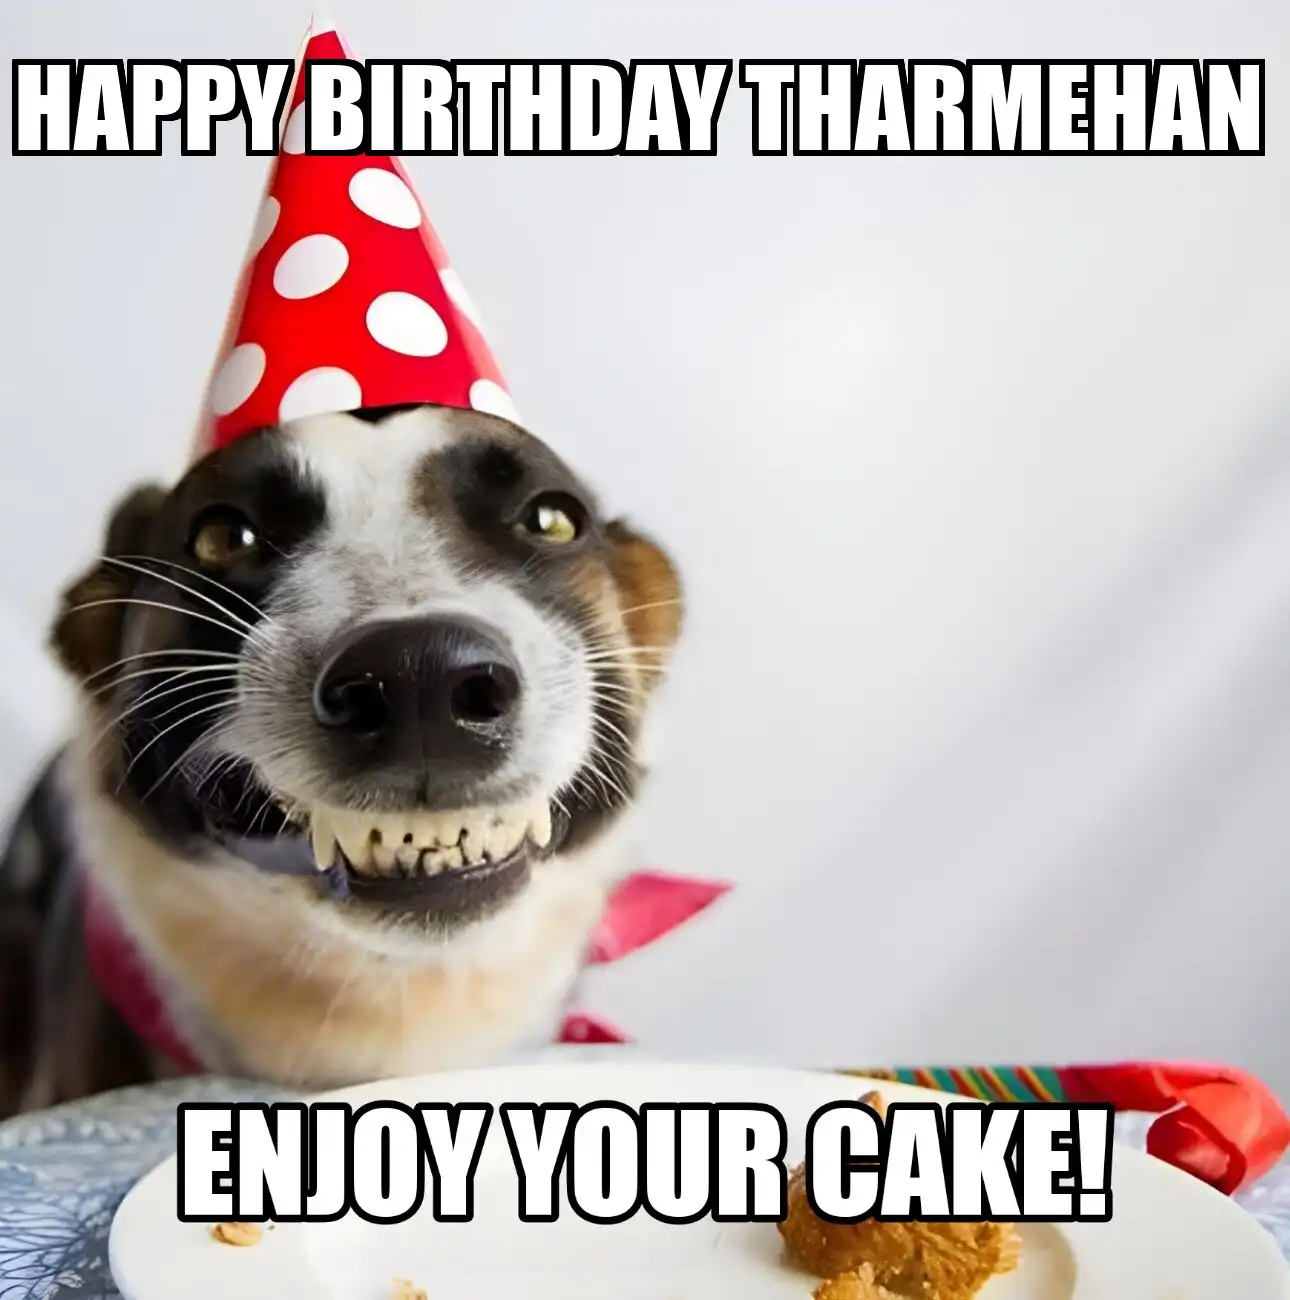 Happy Birthday Tharmehan Enjoy Your Cake Dog Meme